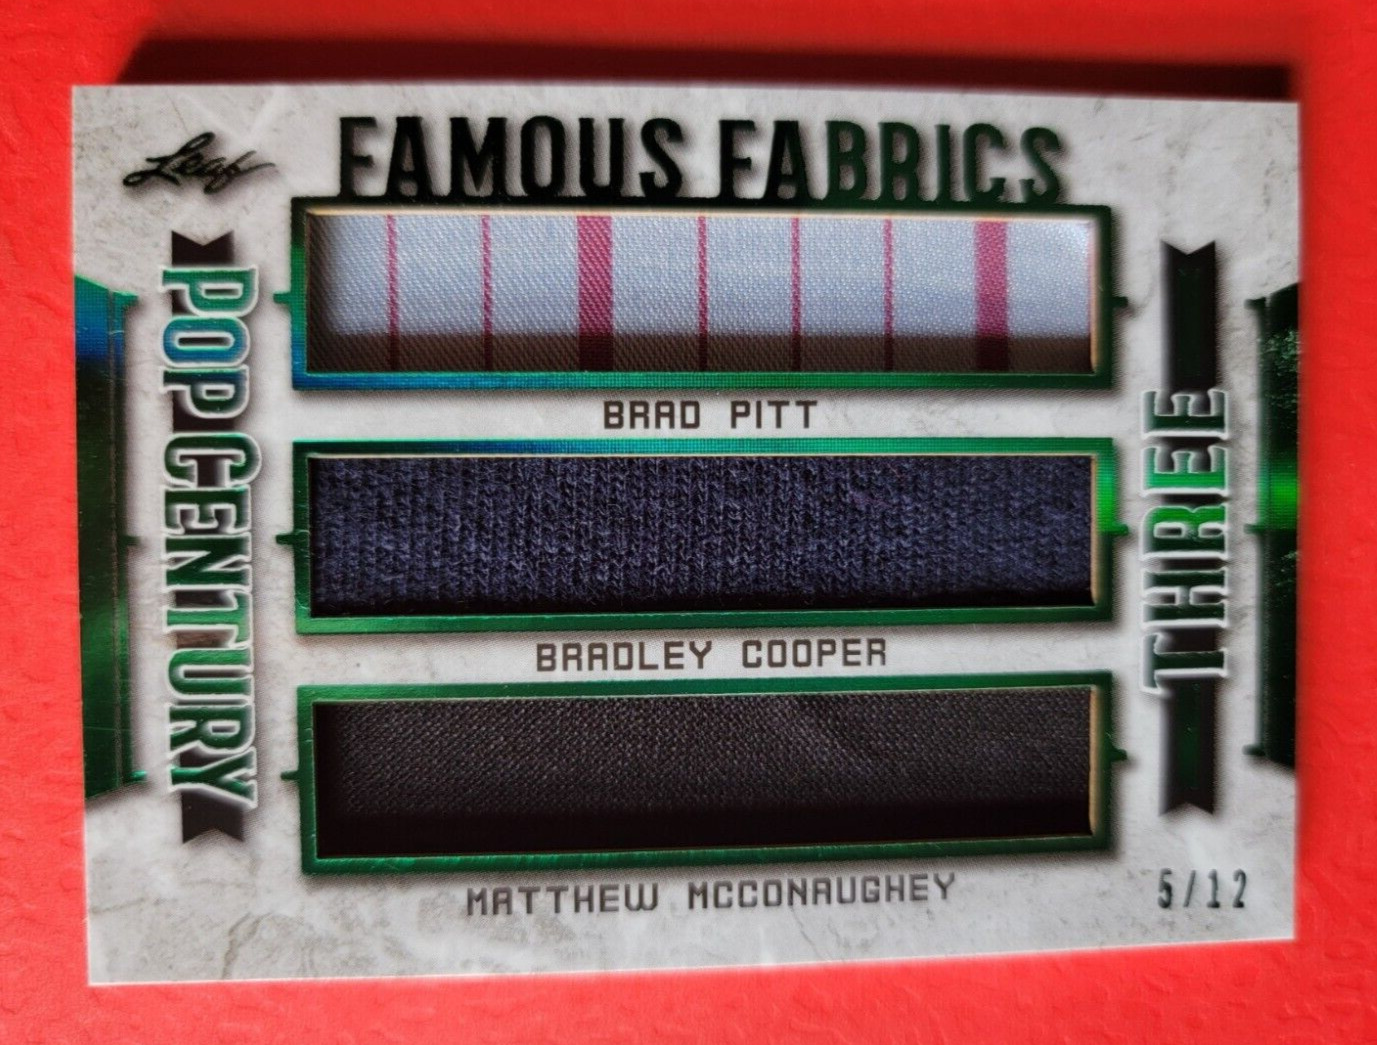 BRAD PITT BRADLEY COOPER MATTHEW MCCONAUGHEY WORN RELIC CARD #d5/12 LEAF FABRICS